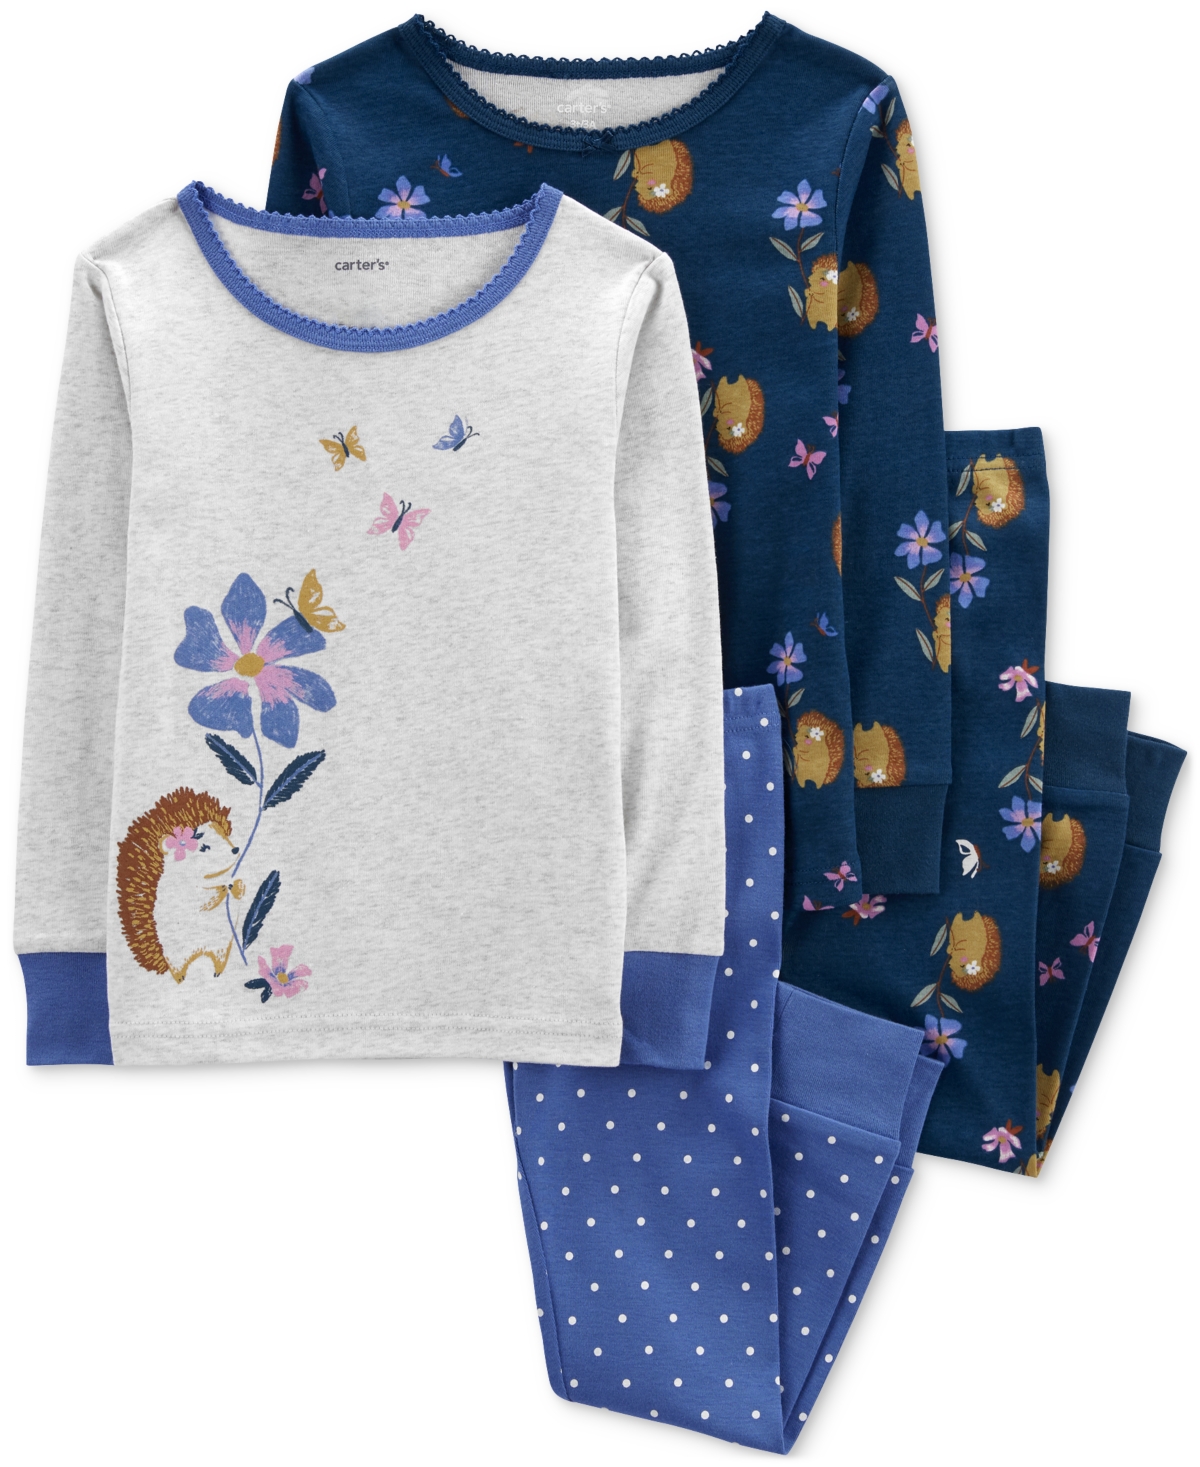 Carter's Baby Girls 100% Snug Fit Cotton Pajamas, 4 Piece Set In Blue